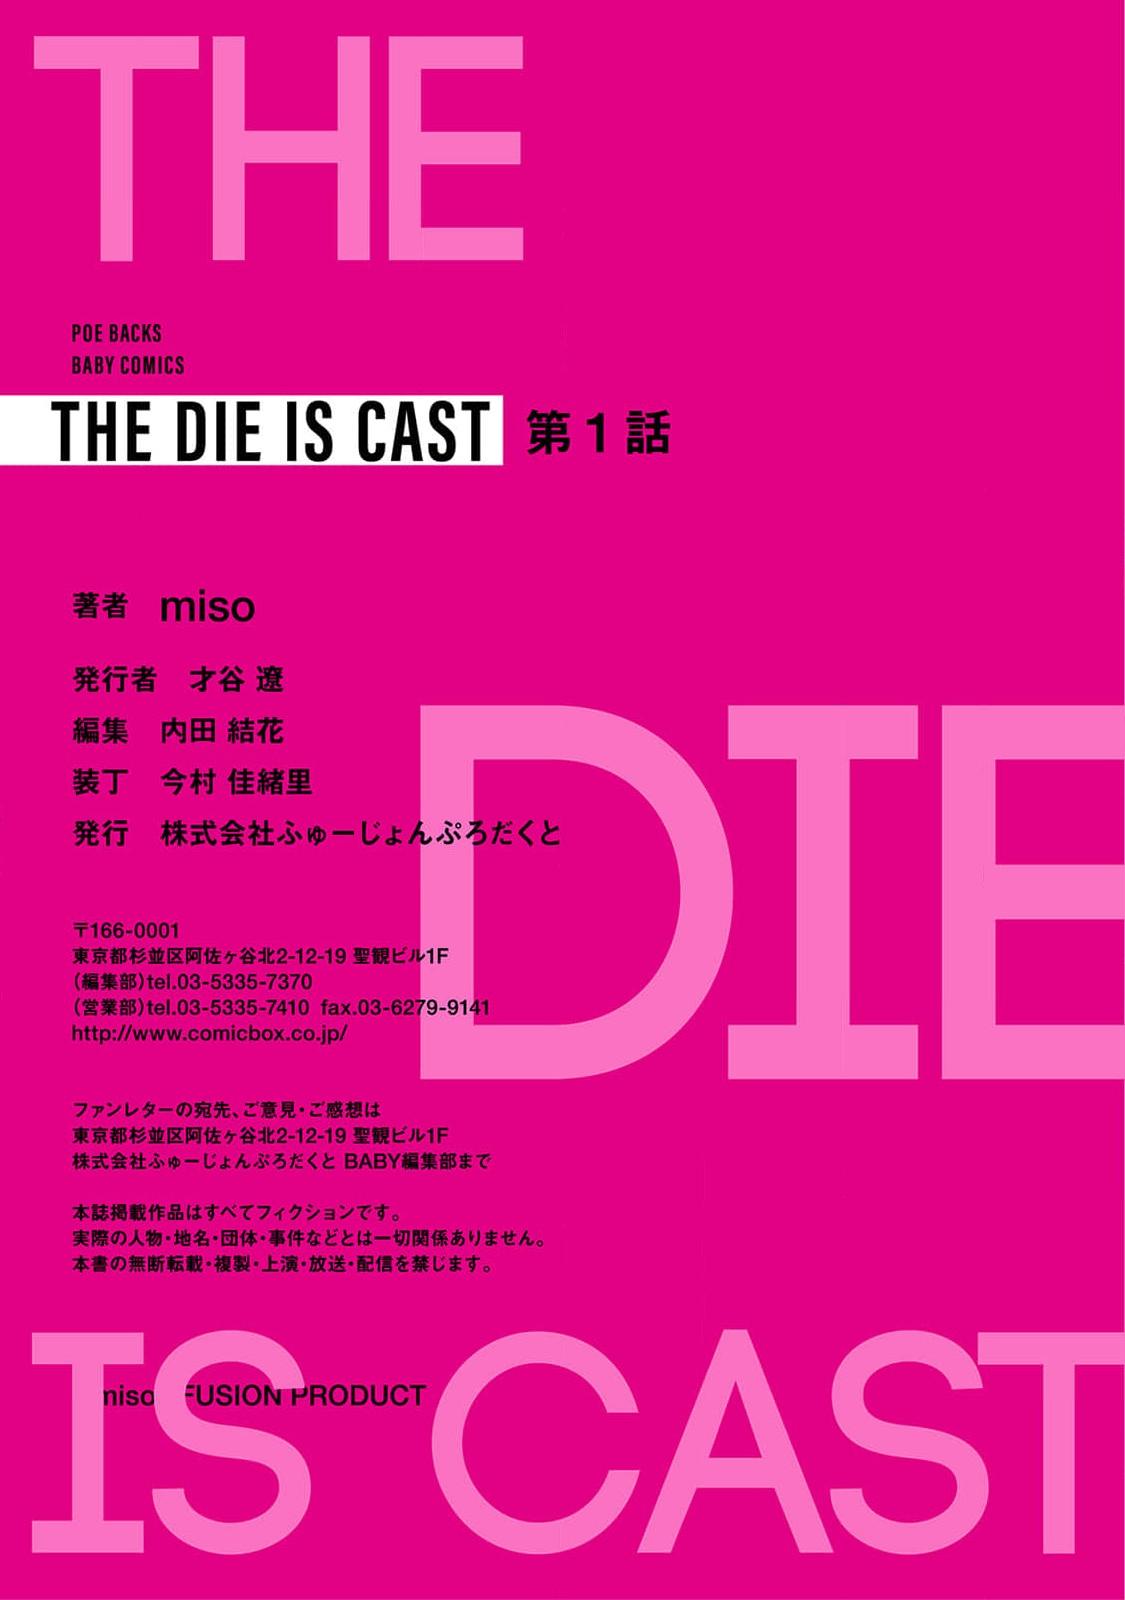 THE DIE IS CAST 1 28